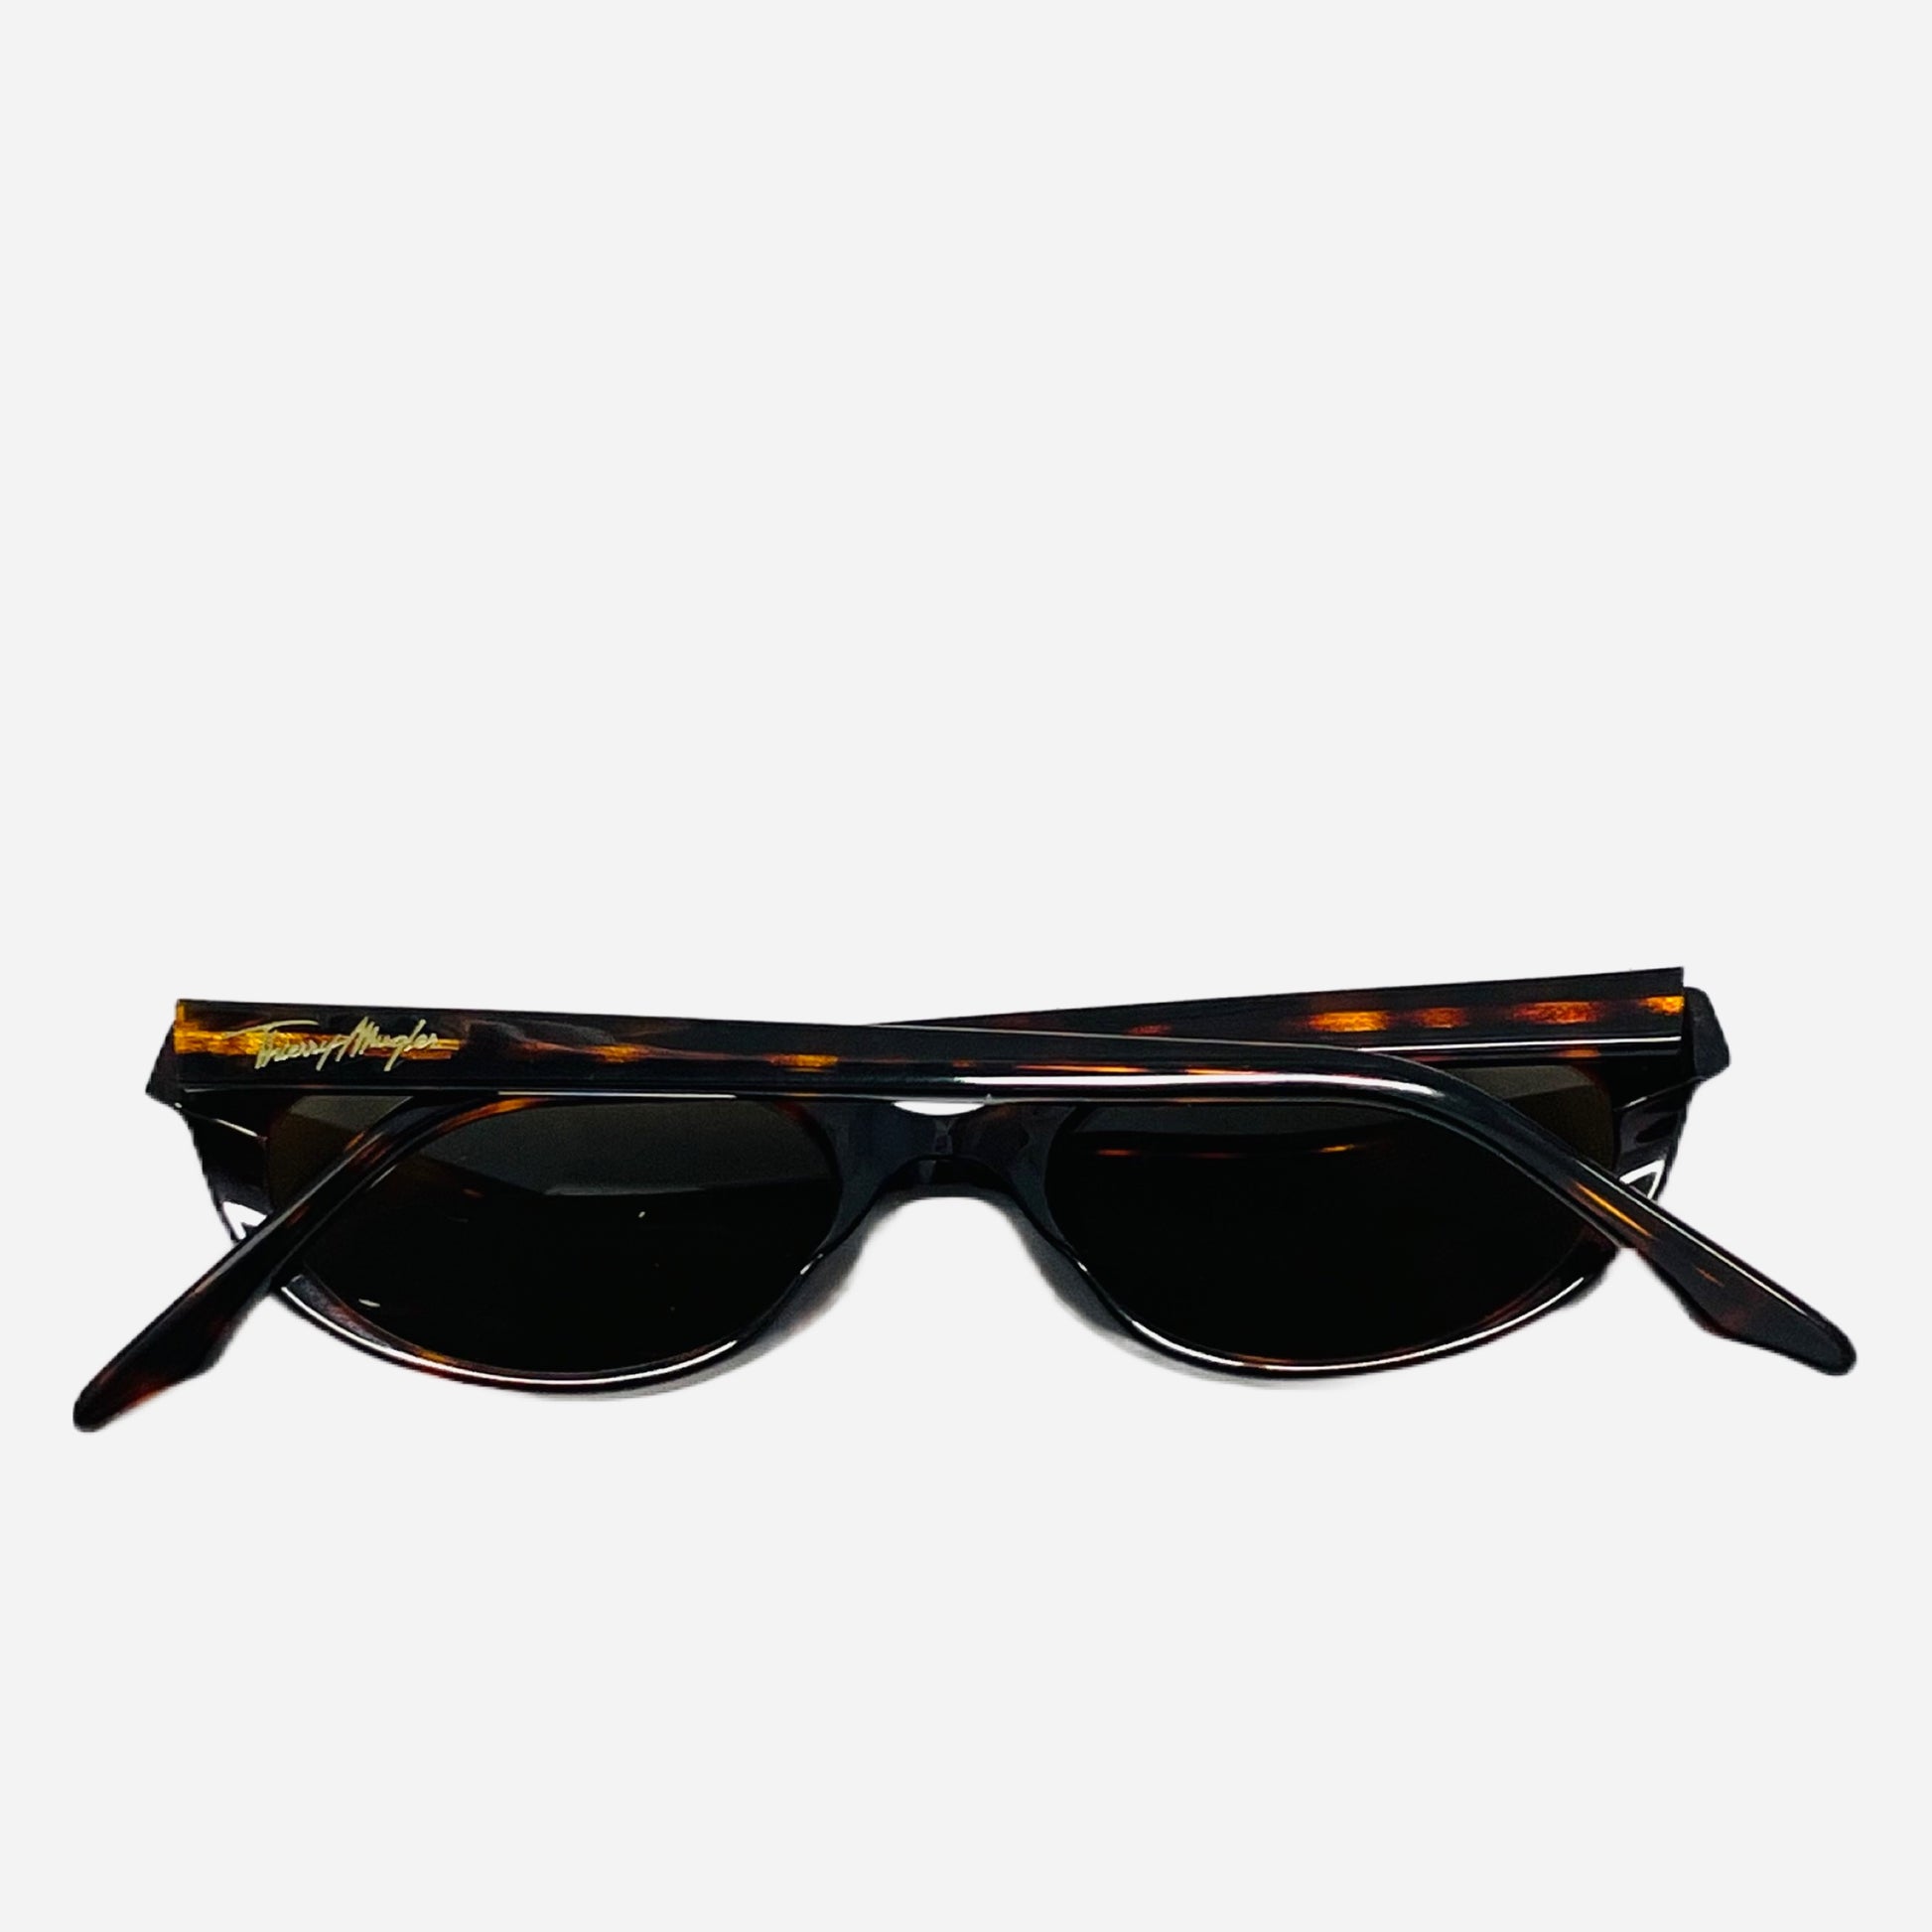 Vintage-Thierry-Mugler-Sonnenbrille-Sunglasses-schnelle-Brille-Modell-6508-the-seekersback